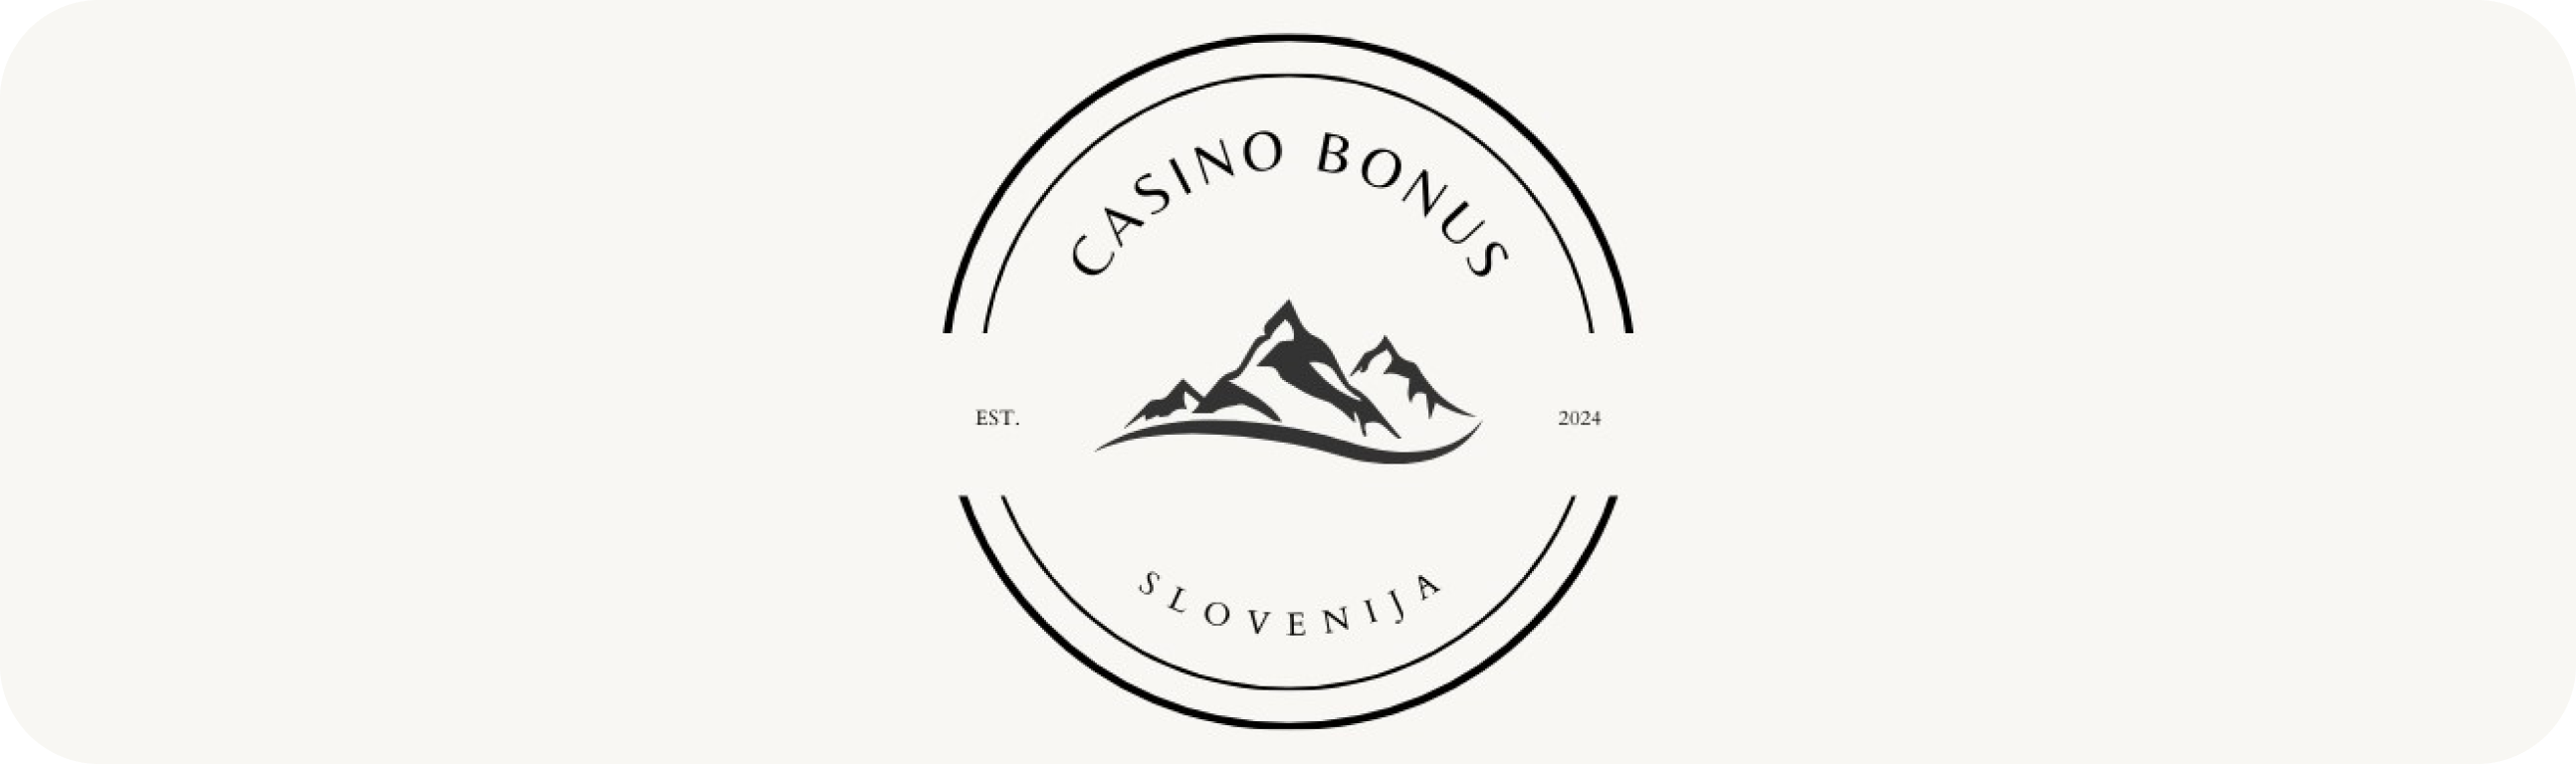 Casino Bonus Slovenija logo